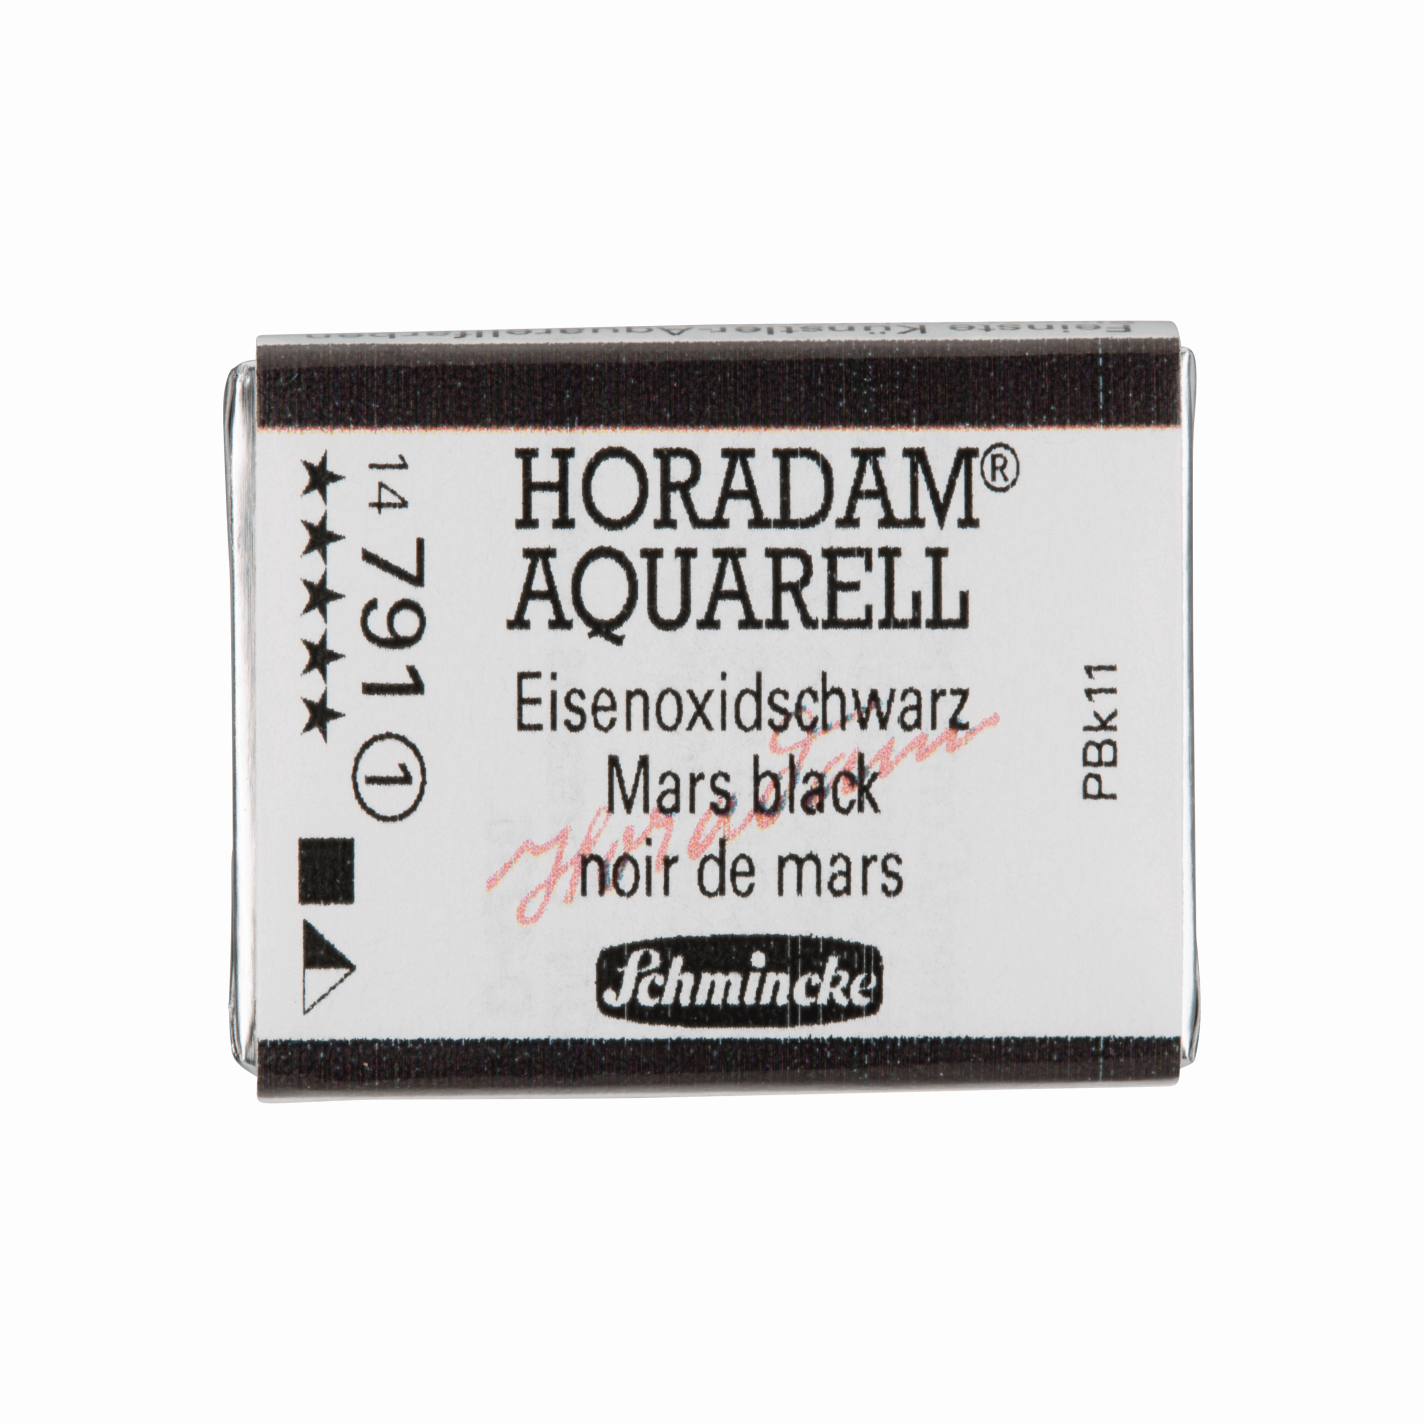 Schmincke Horadam Aquarell pans 1/1 pan Mars Black